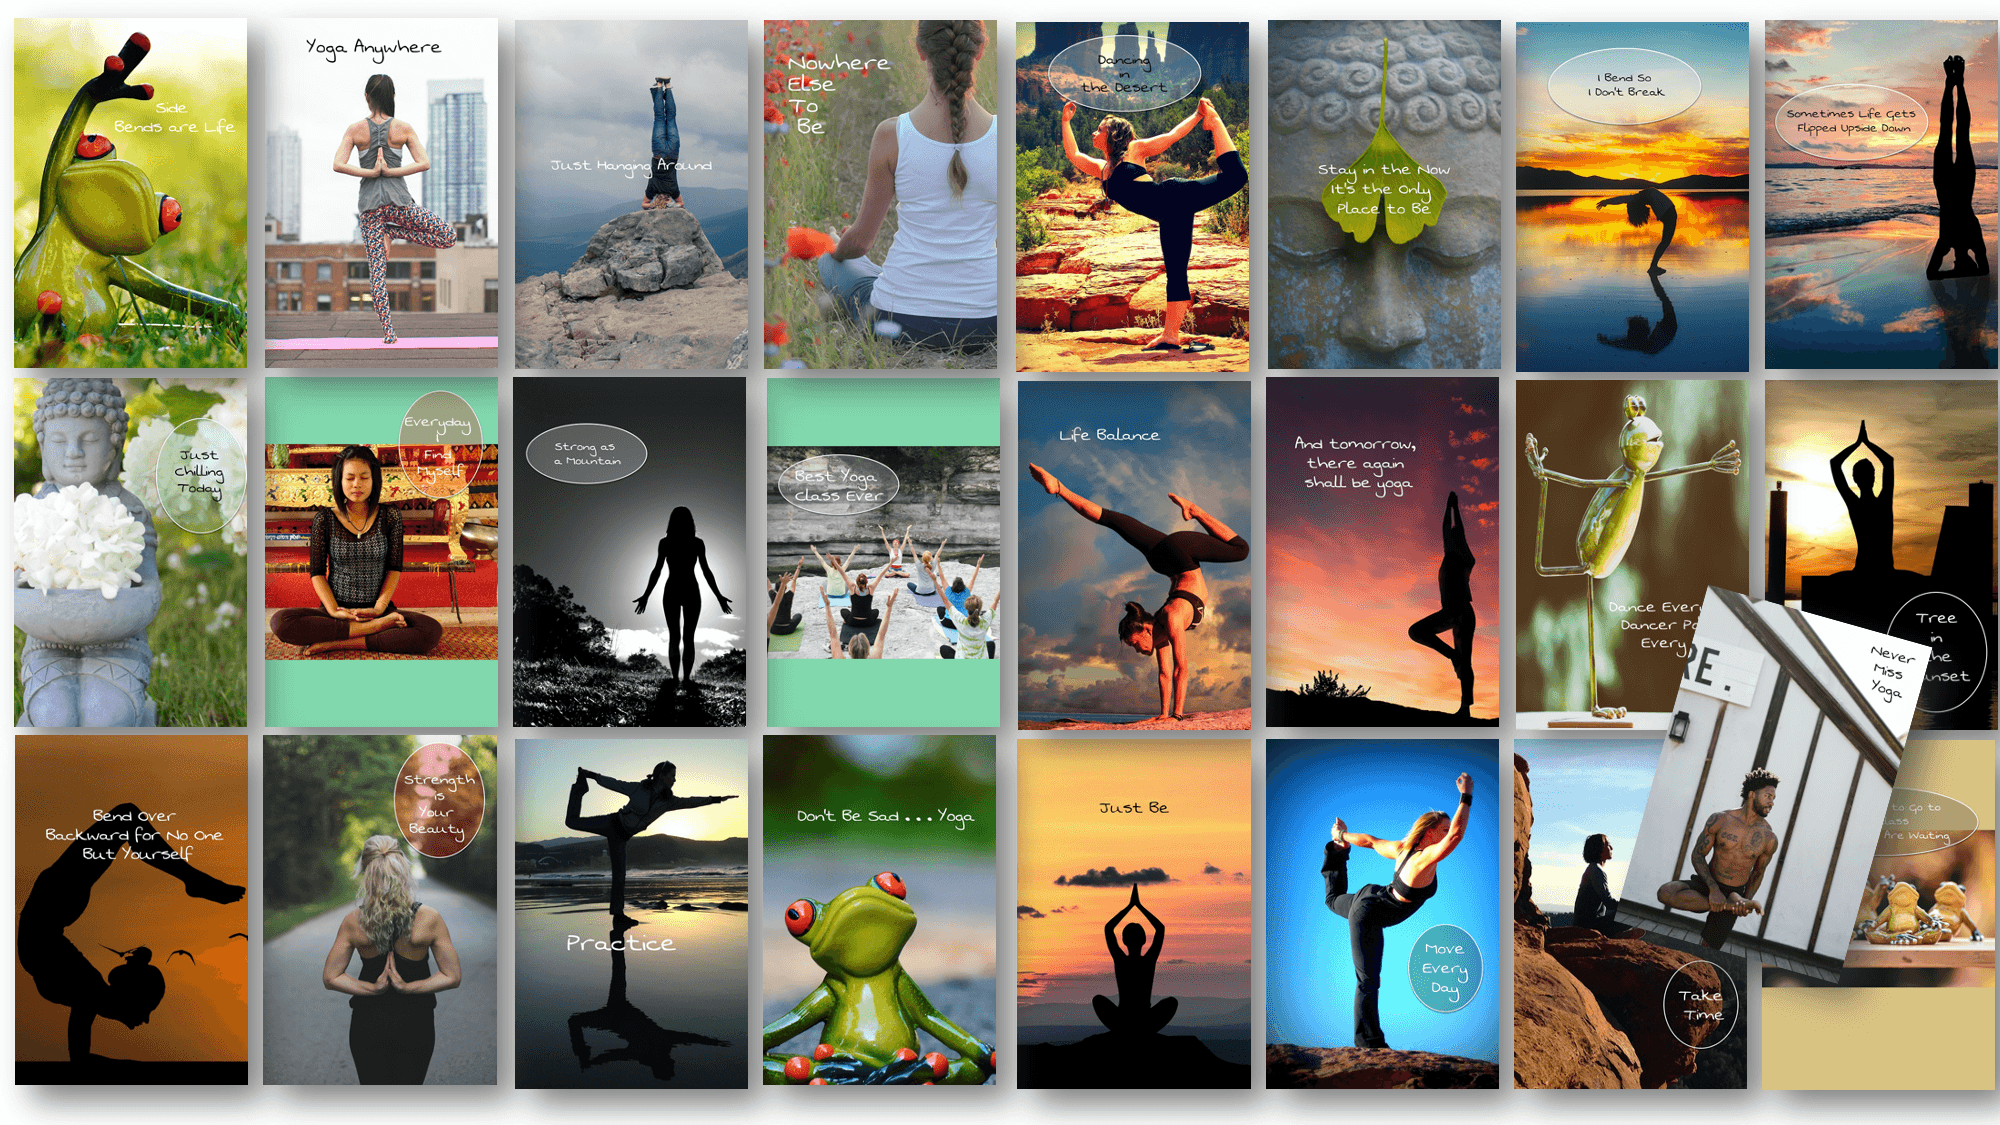 25 More Yoga Pinterest Pins